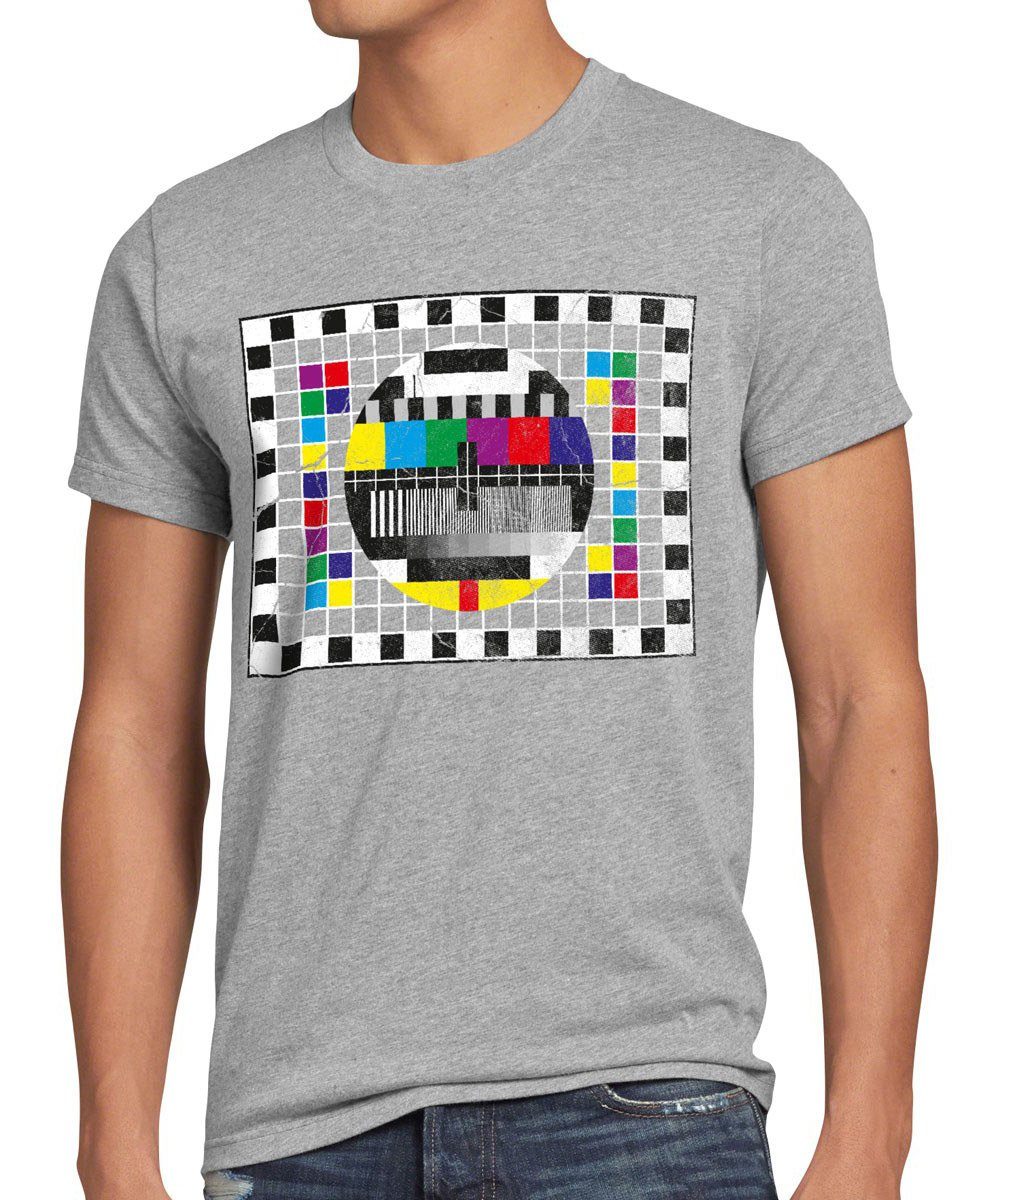 style3 Print-Shirt Herren T-Shirt Testbild big bang sheldon TV monitor retro fernseher LED theory grau meliert